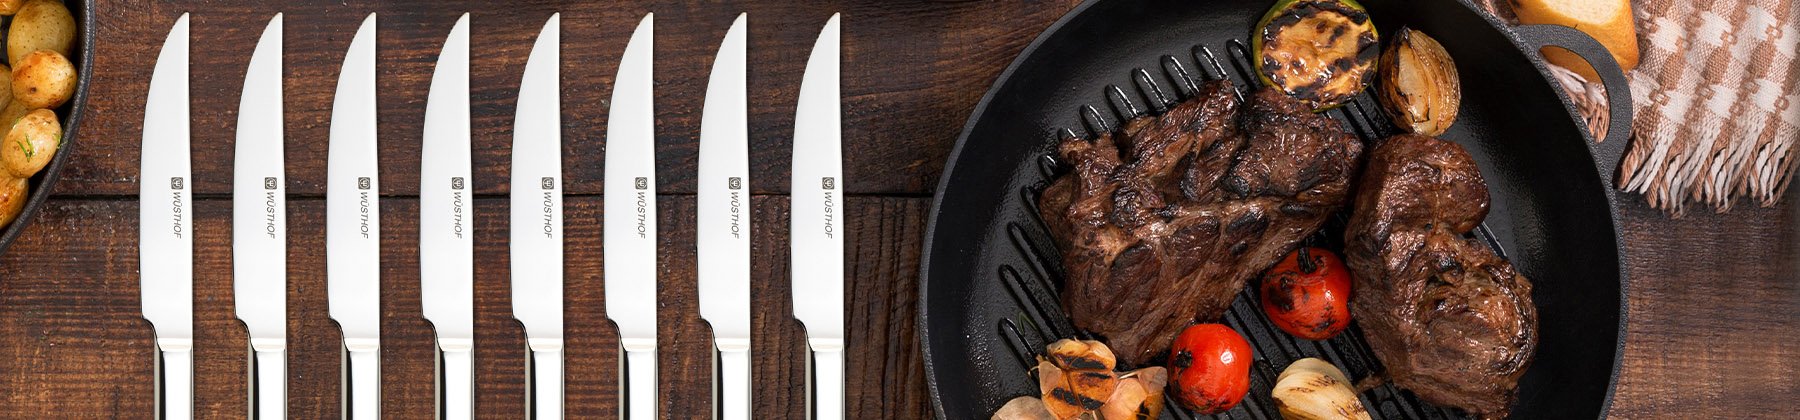 Photo of steak knife sets.